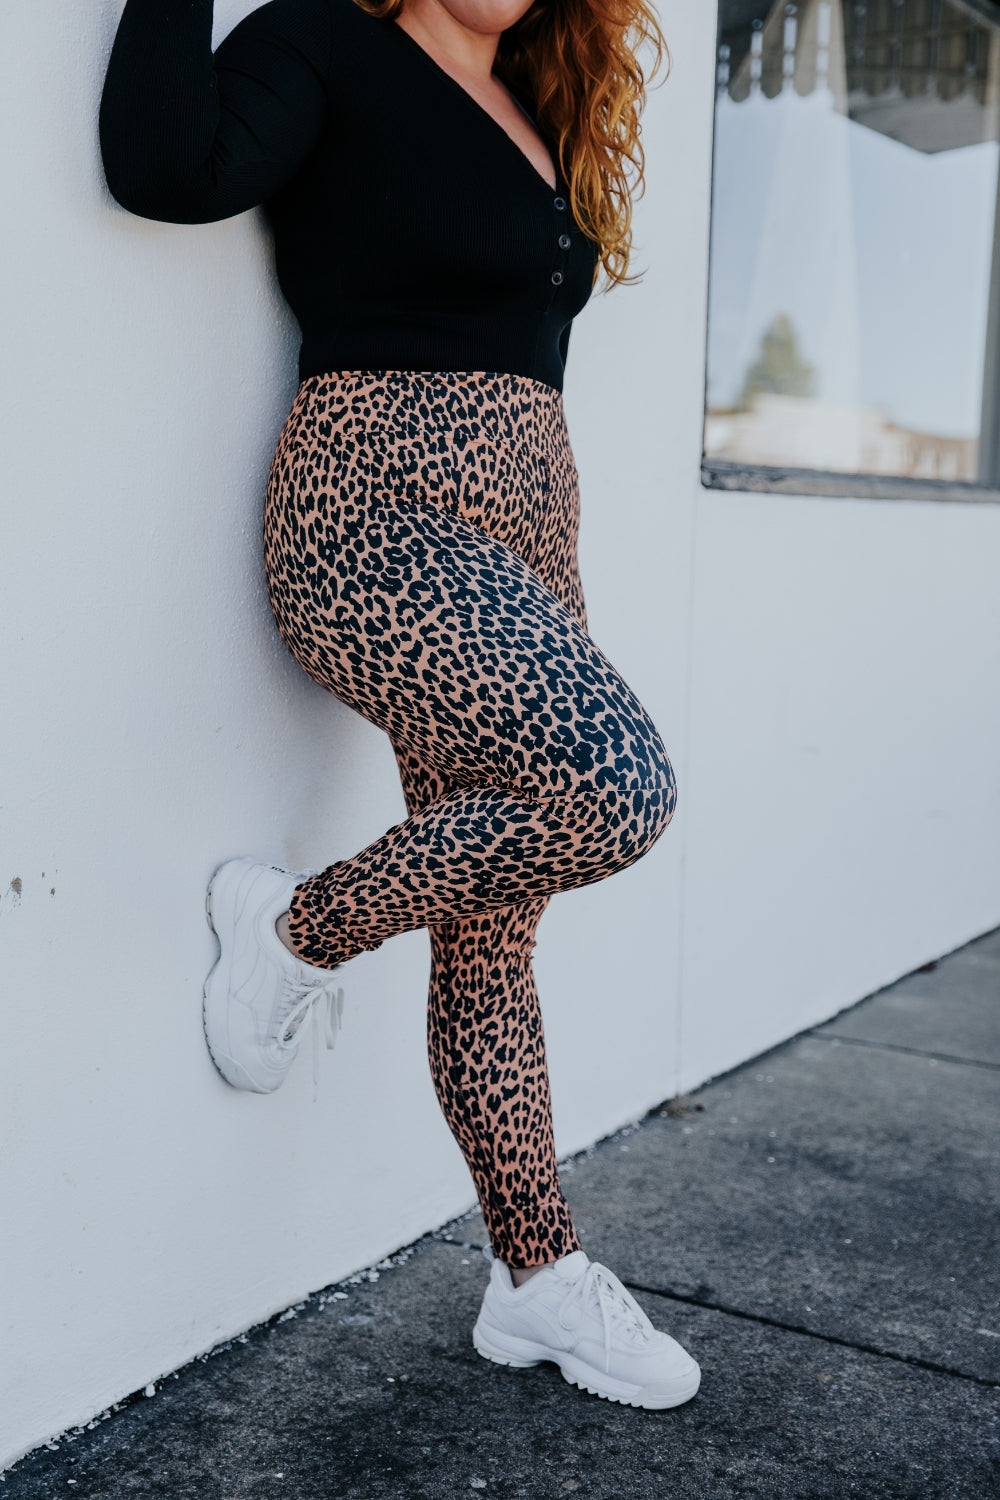 TIYOMI Plus Size Women's Leopard Leggings 2X Full Length Pants